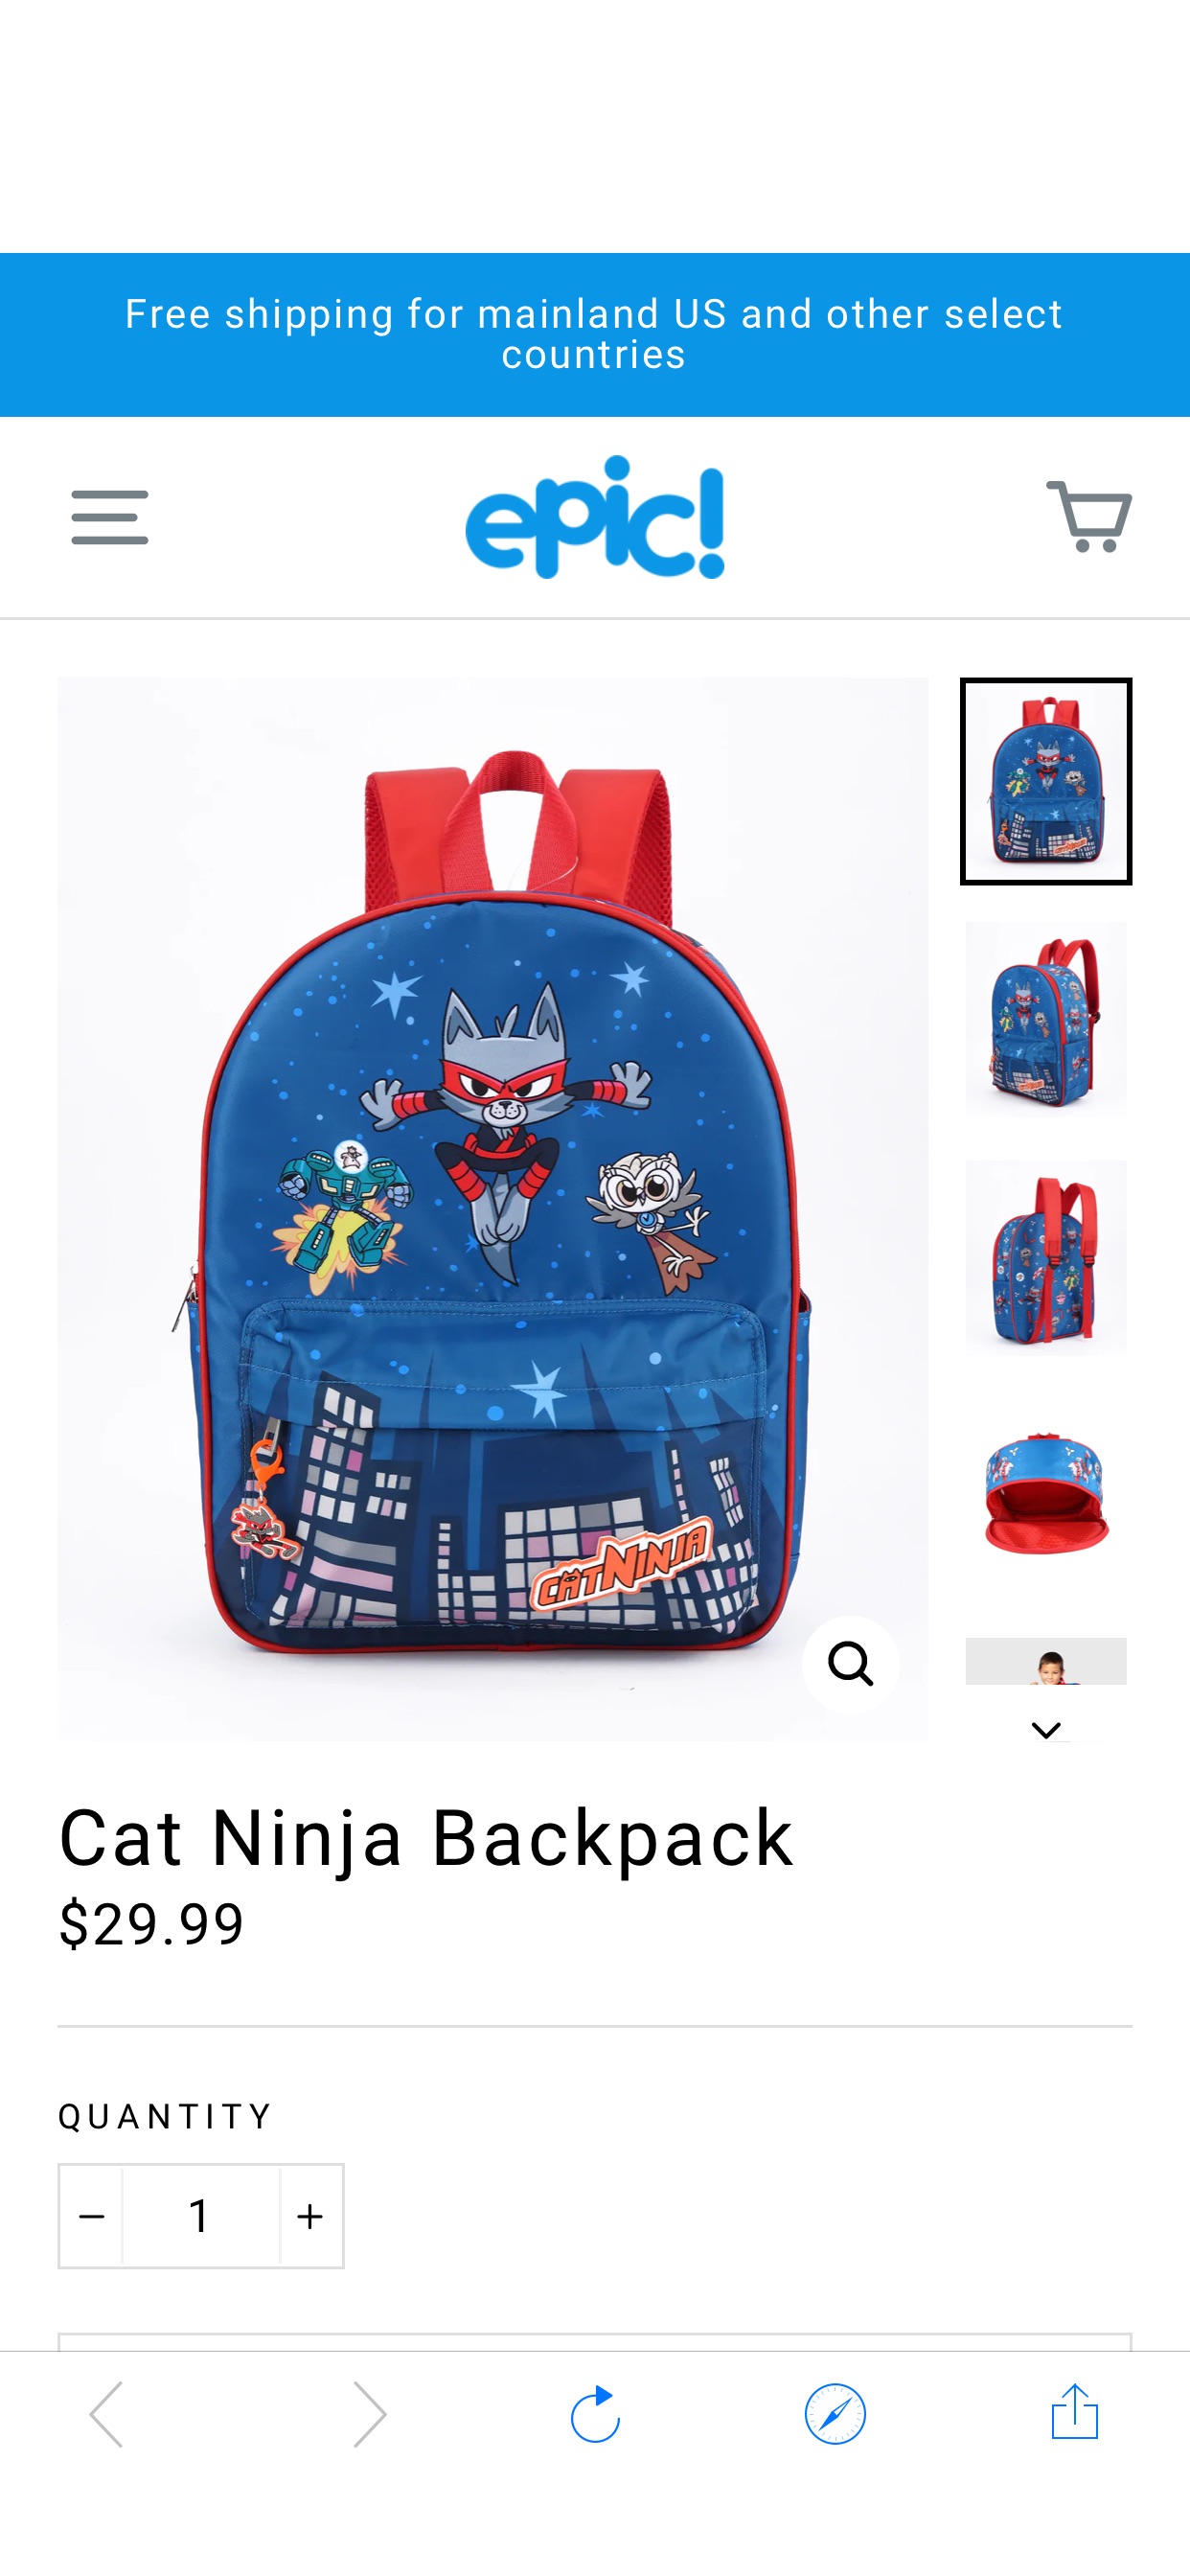 Cat Ninja Backpack – Get Epic